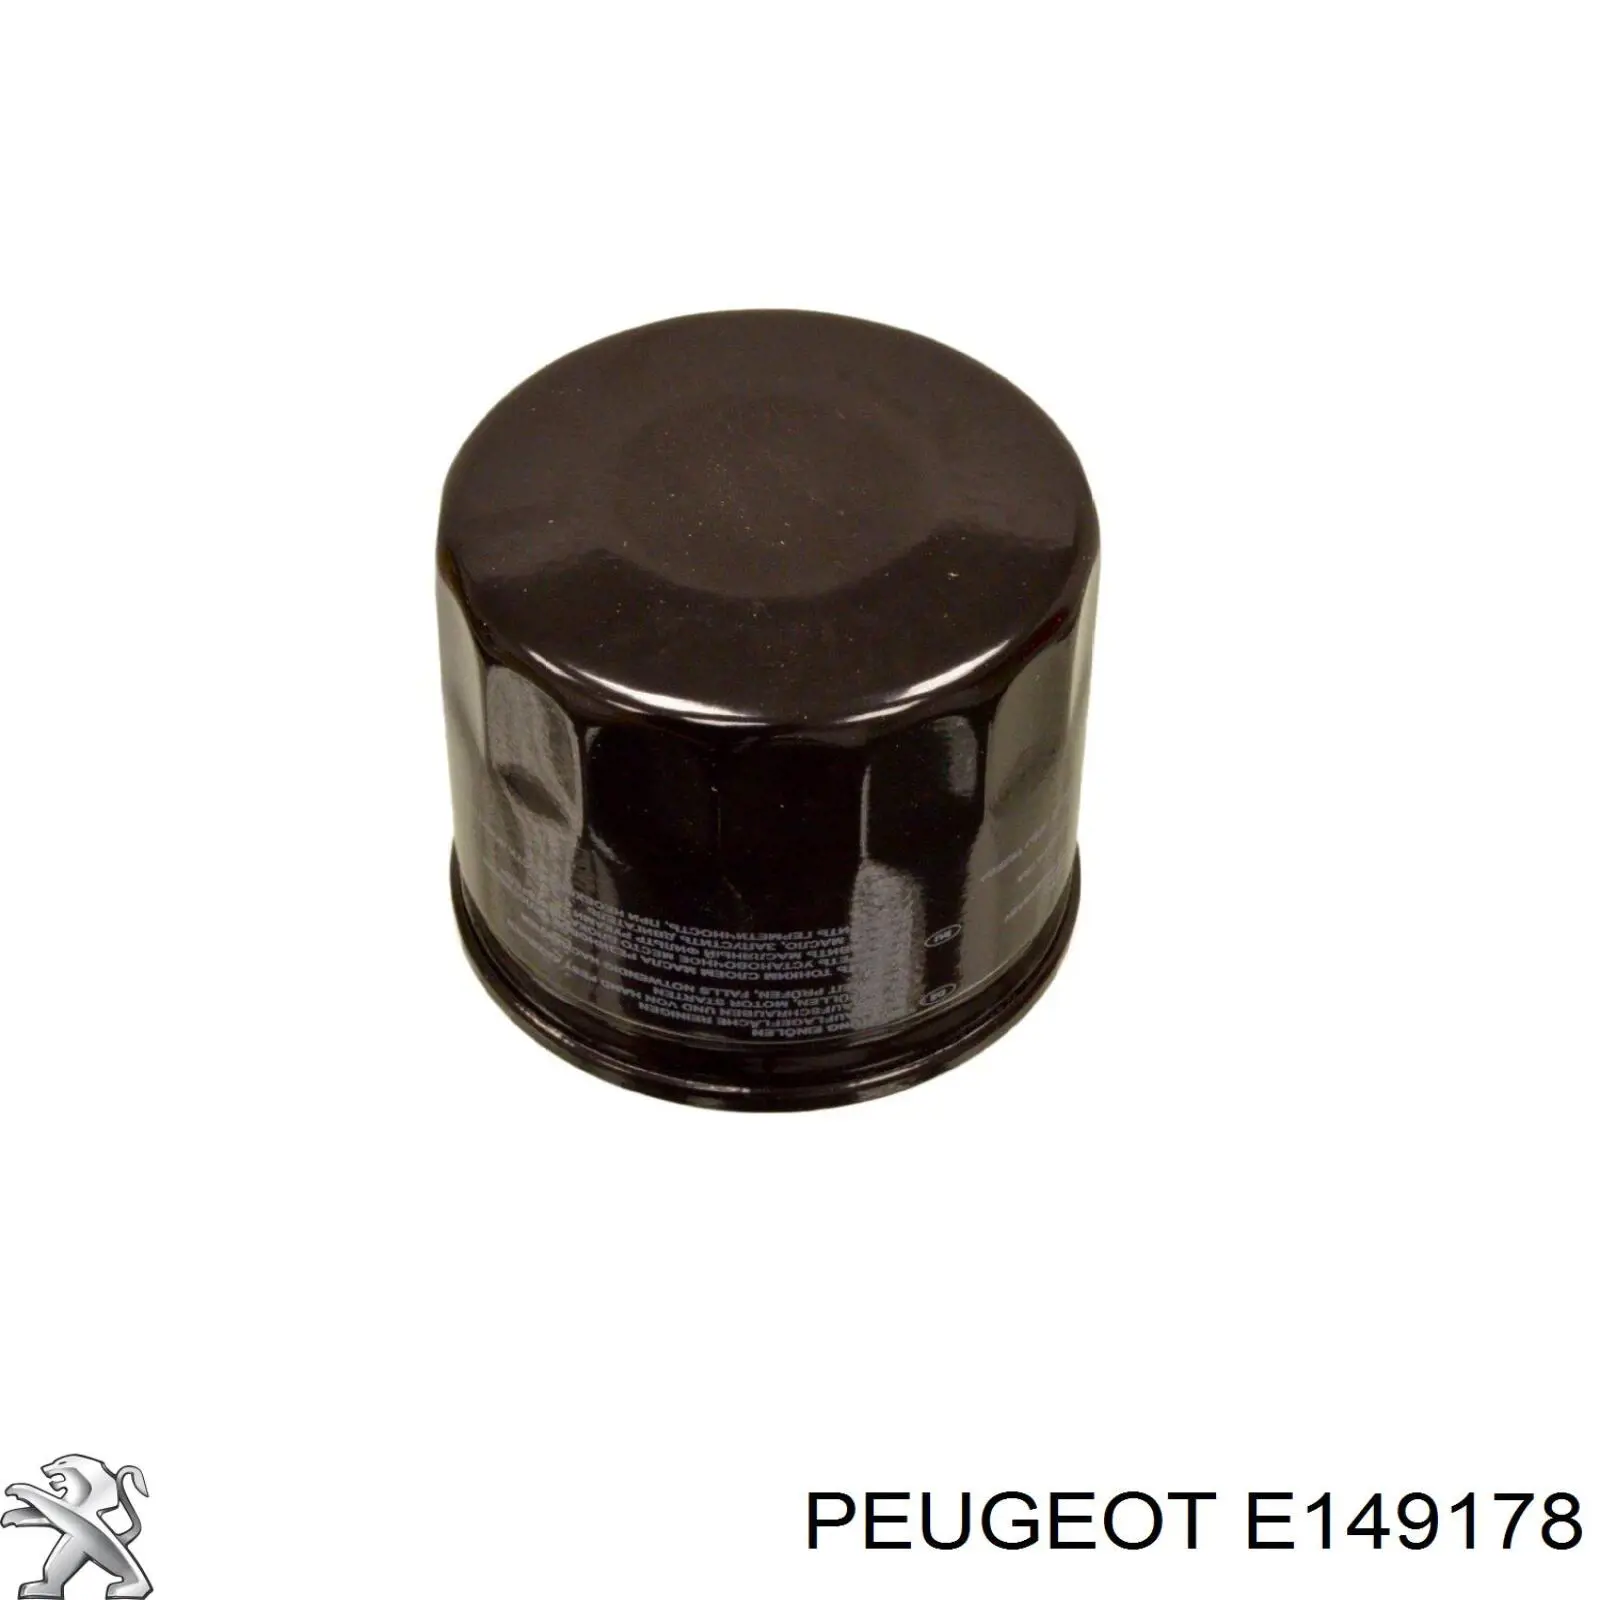 E149178 Peugeot/Citroen filtro de aceite